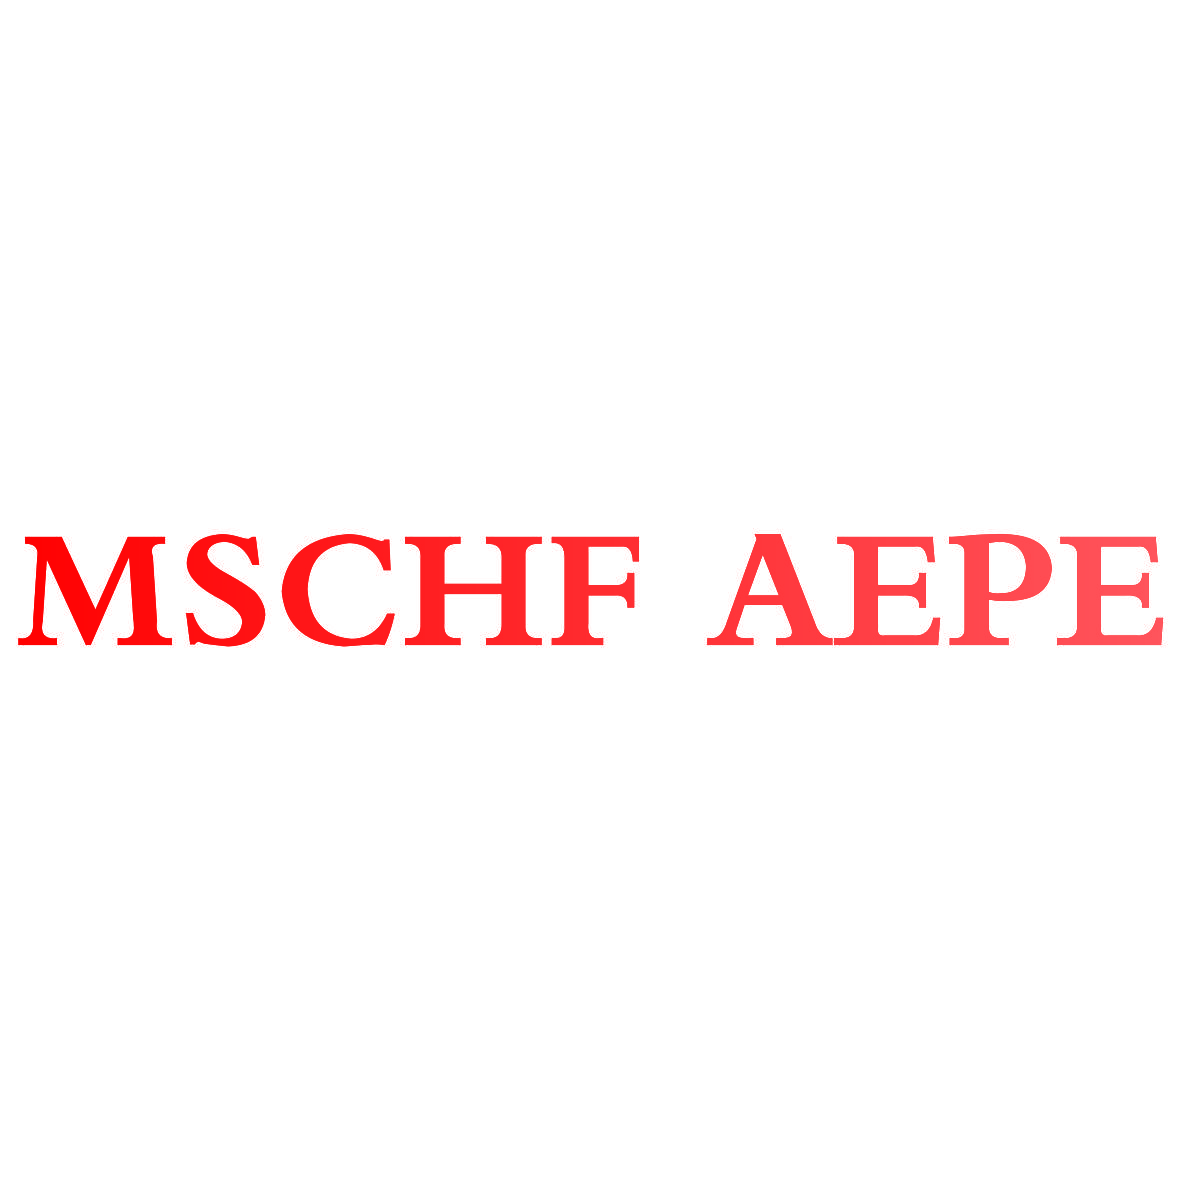 MSCHF AEPE